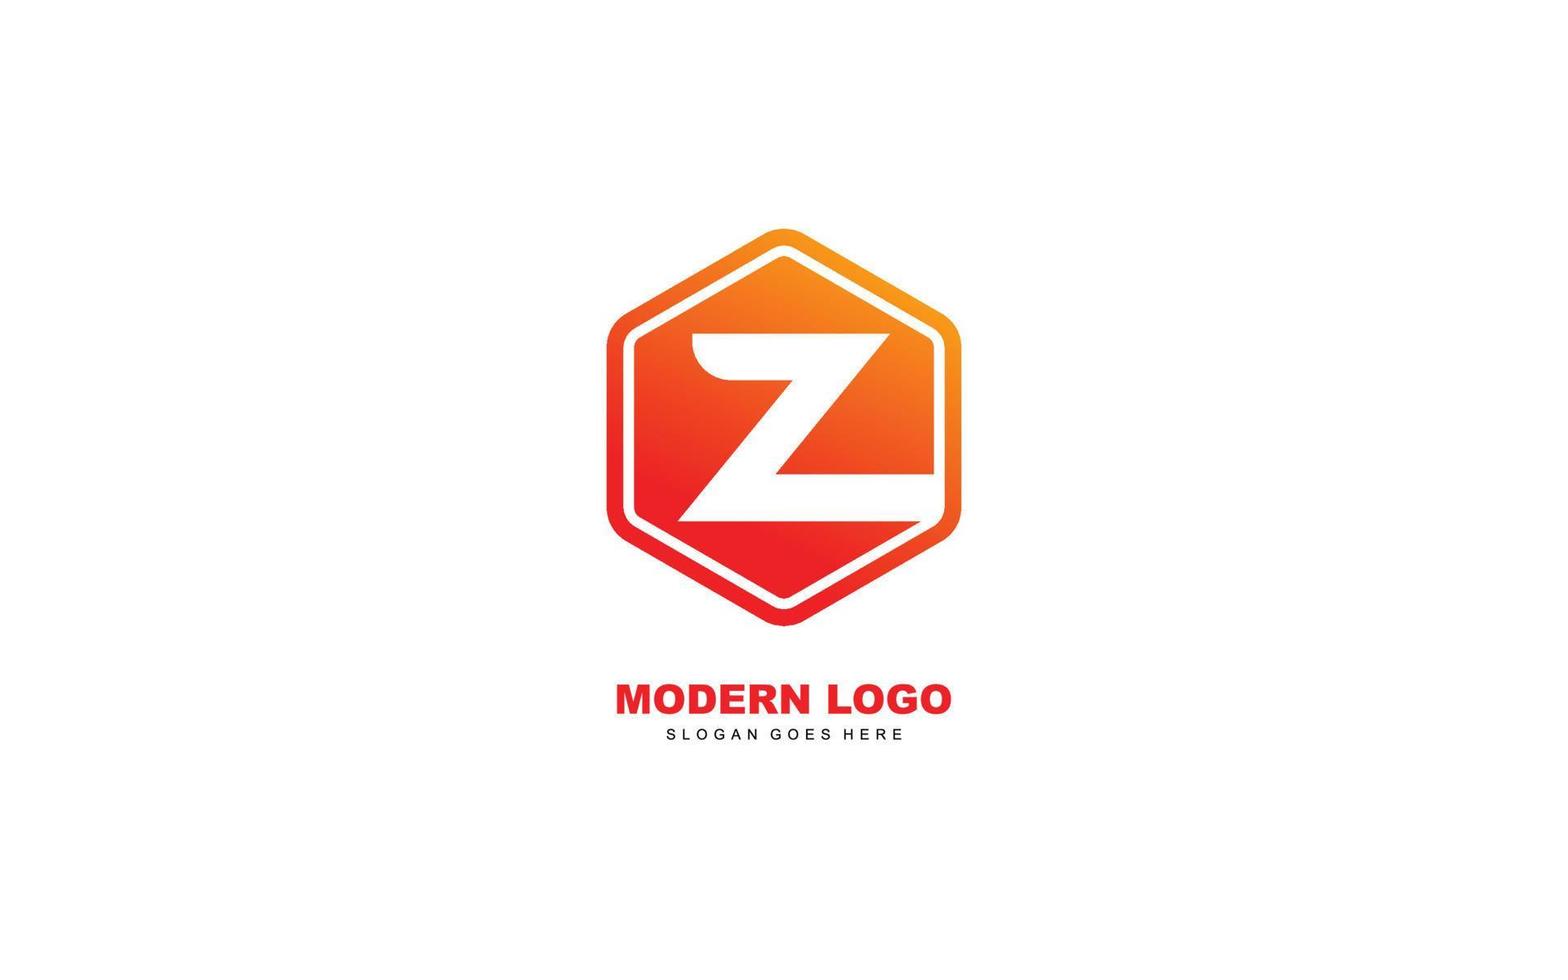 Z logo shape for identity. letter template vector illustration for your brand.